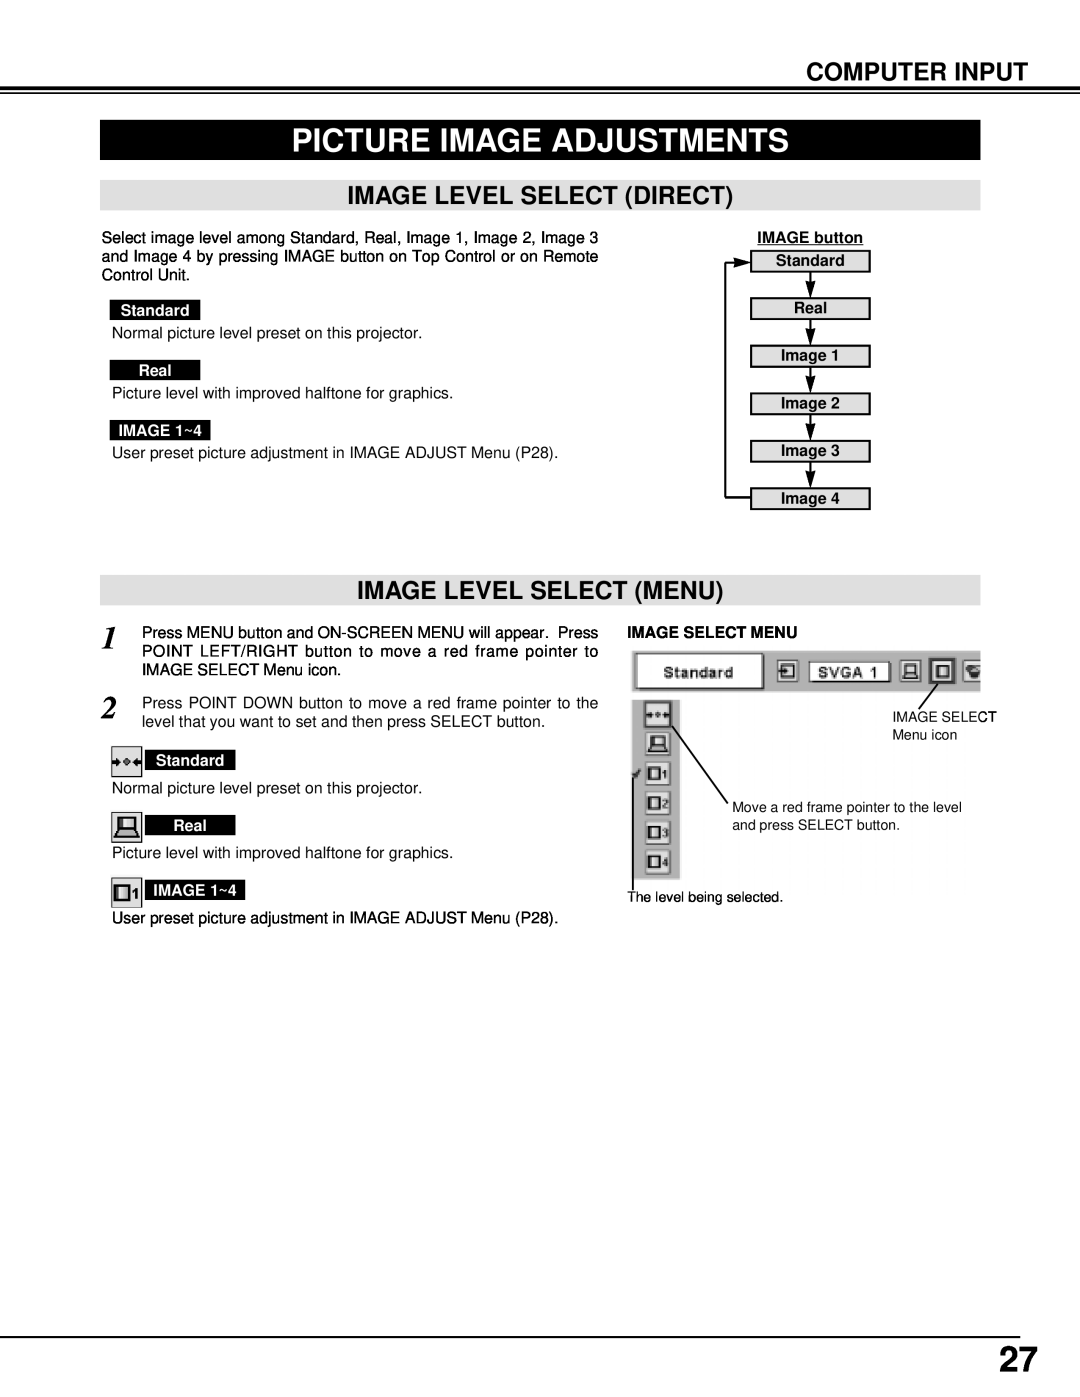 Eiki LC-NB3W owner manual Picture Image Adjustments, Image Level Select Direct, Image Level Select Menu, Computer Input 